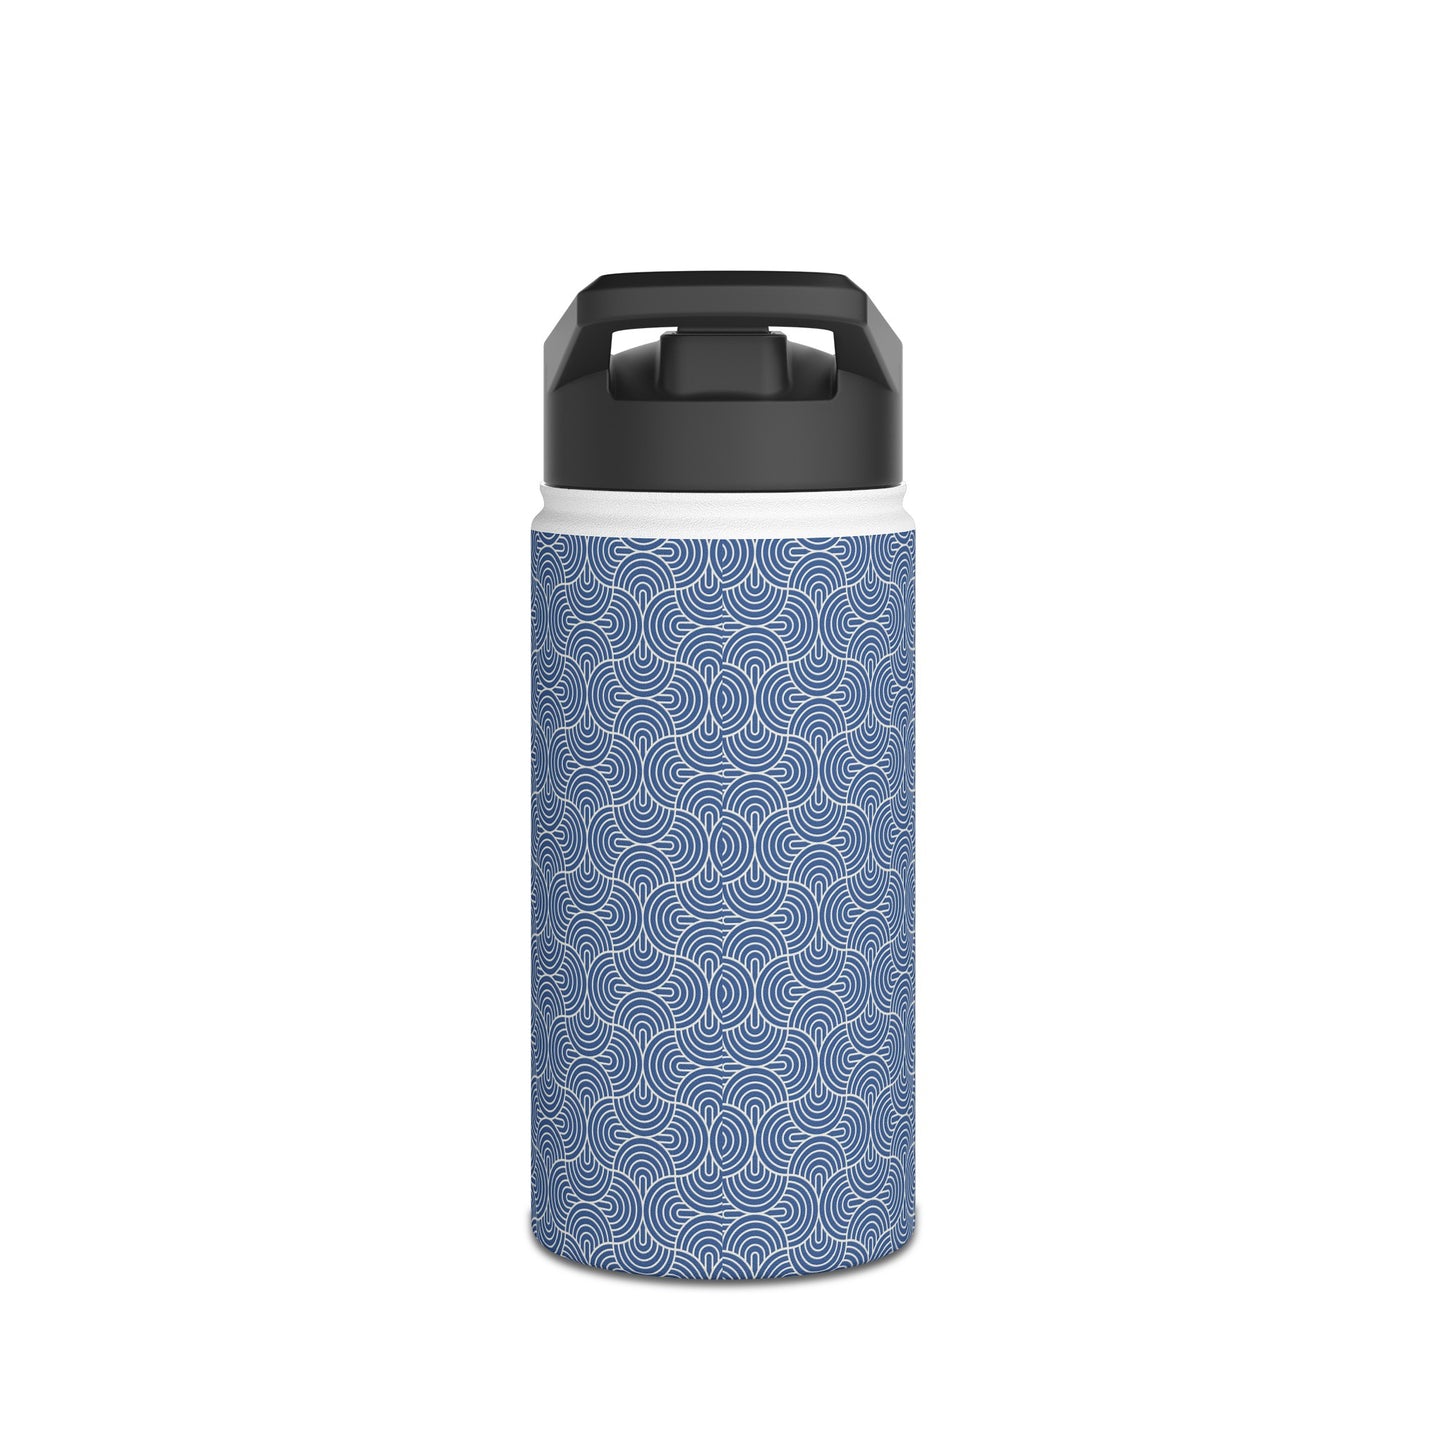 Mod Ovals - Cobalt Blue Stainless Steel Water Bottle, Standard Lid